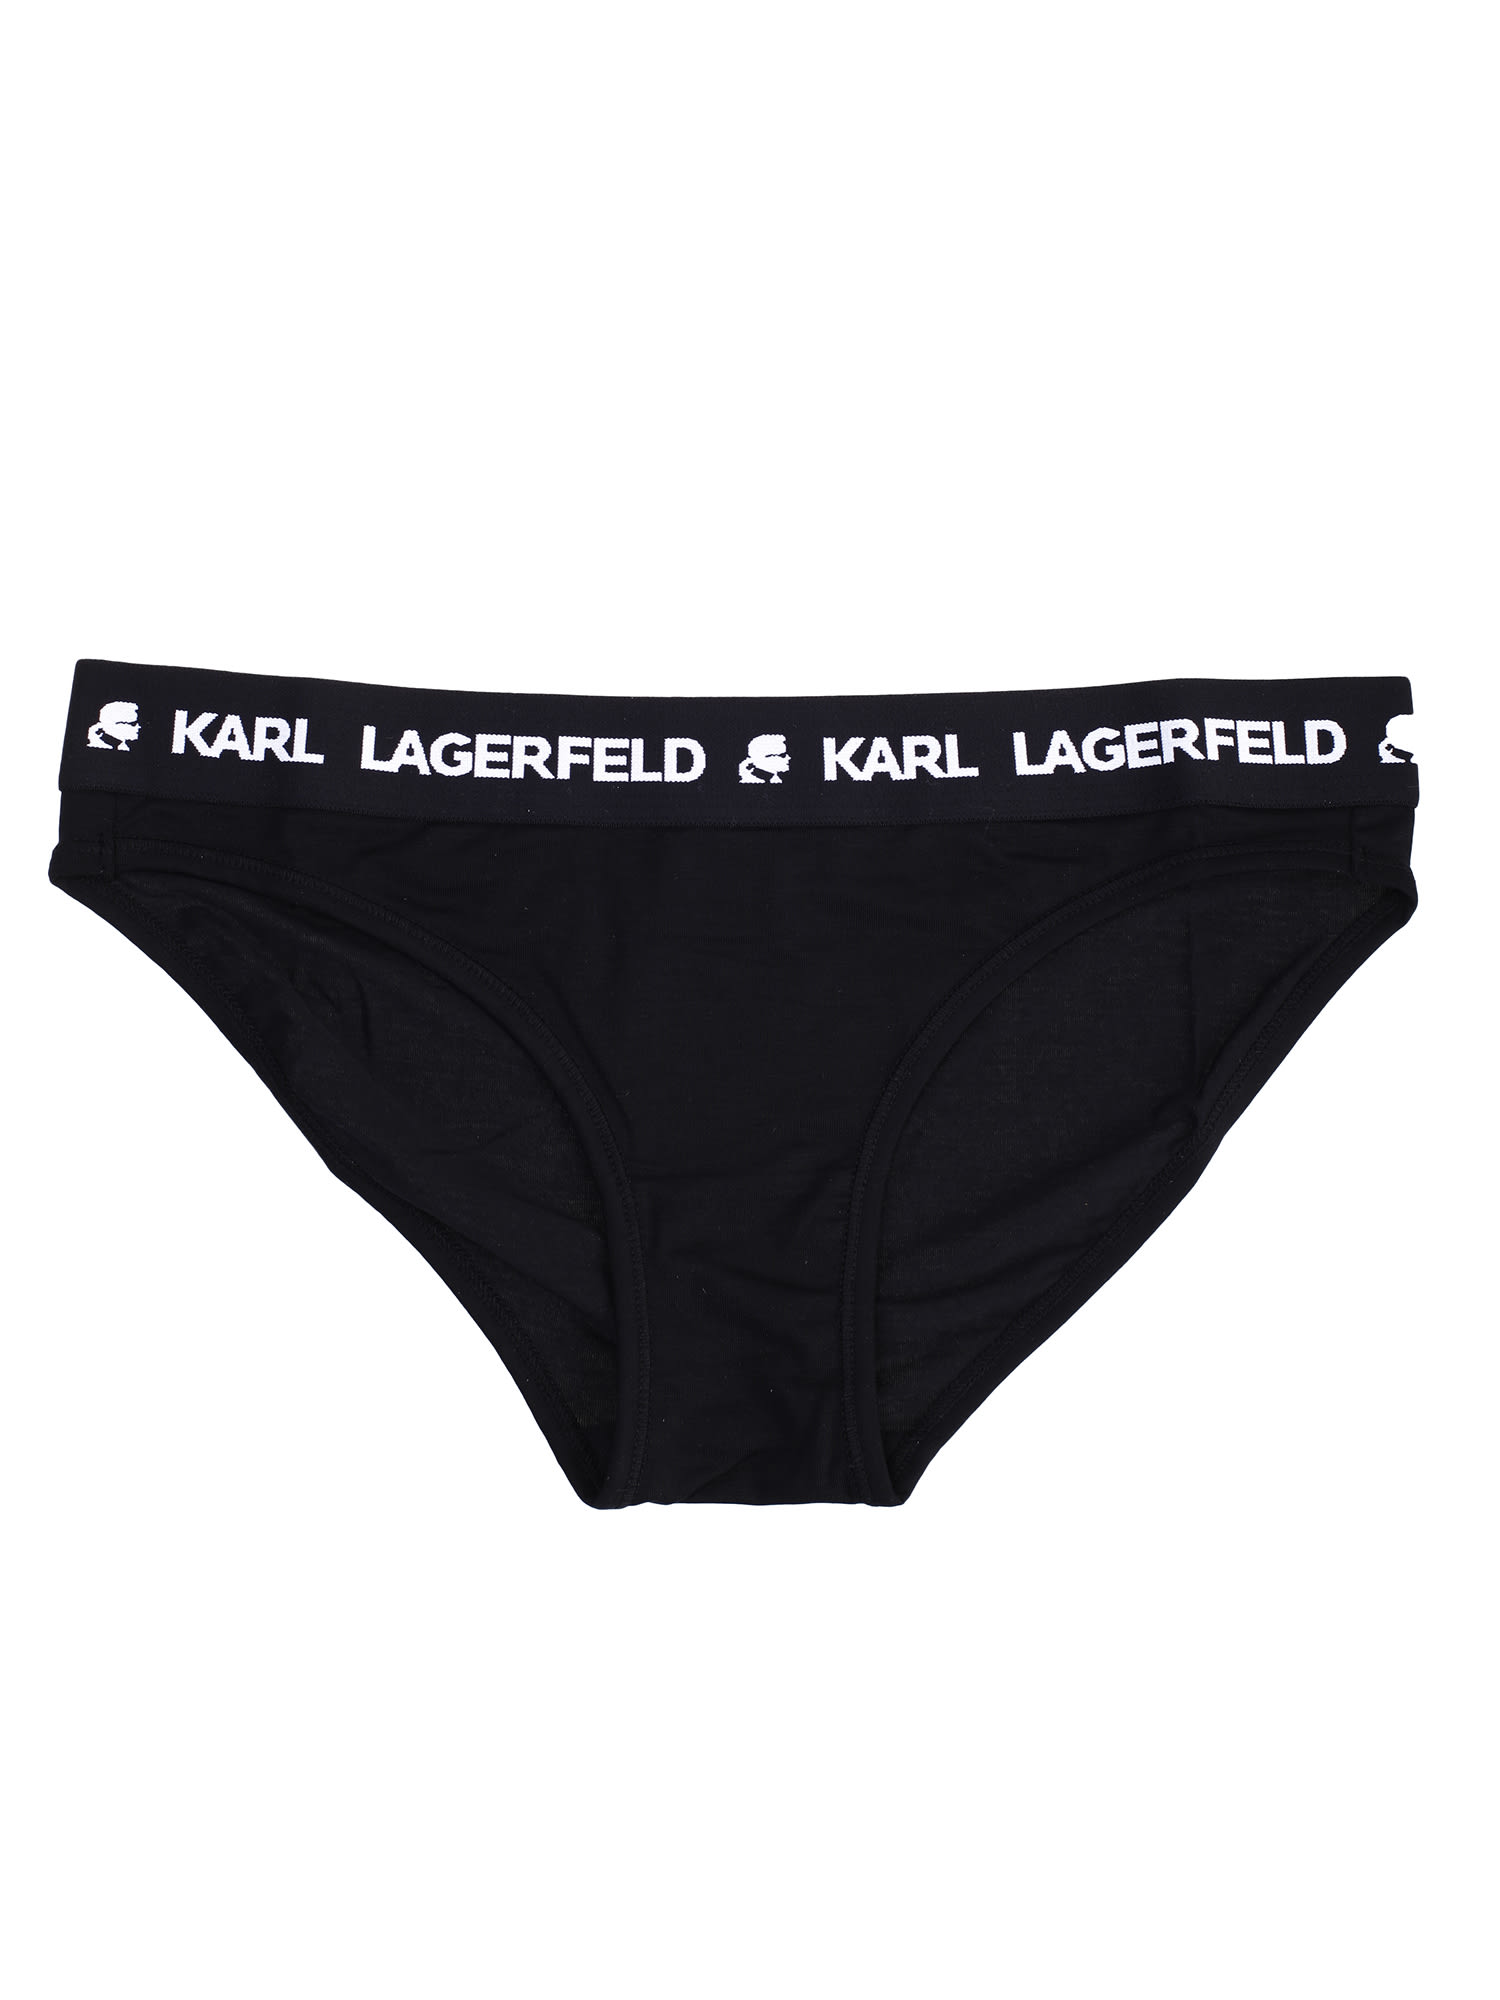 Karl Lagerfeld stretch briefs